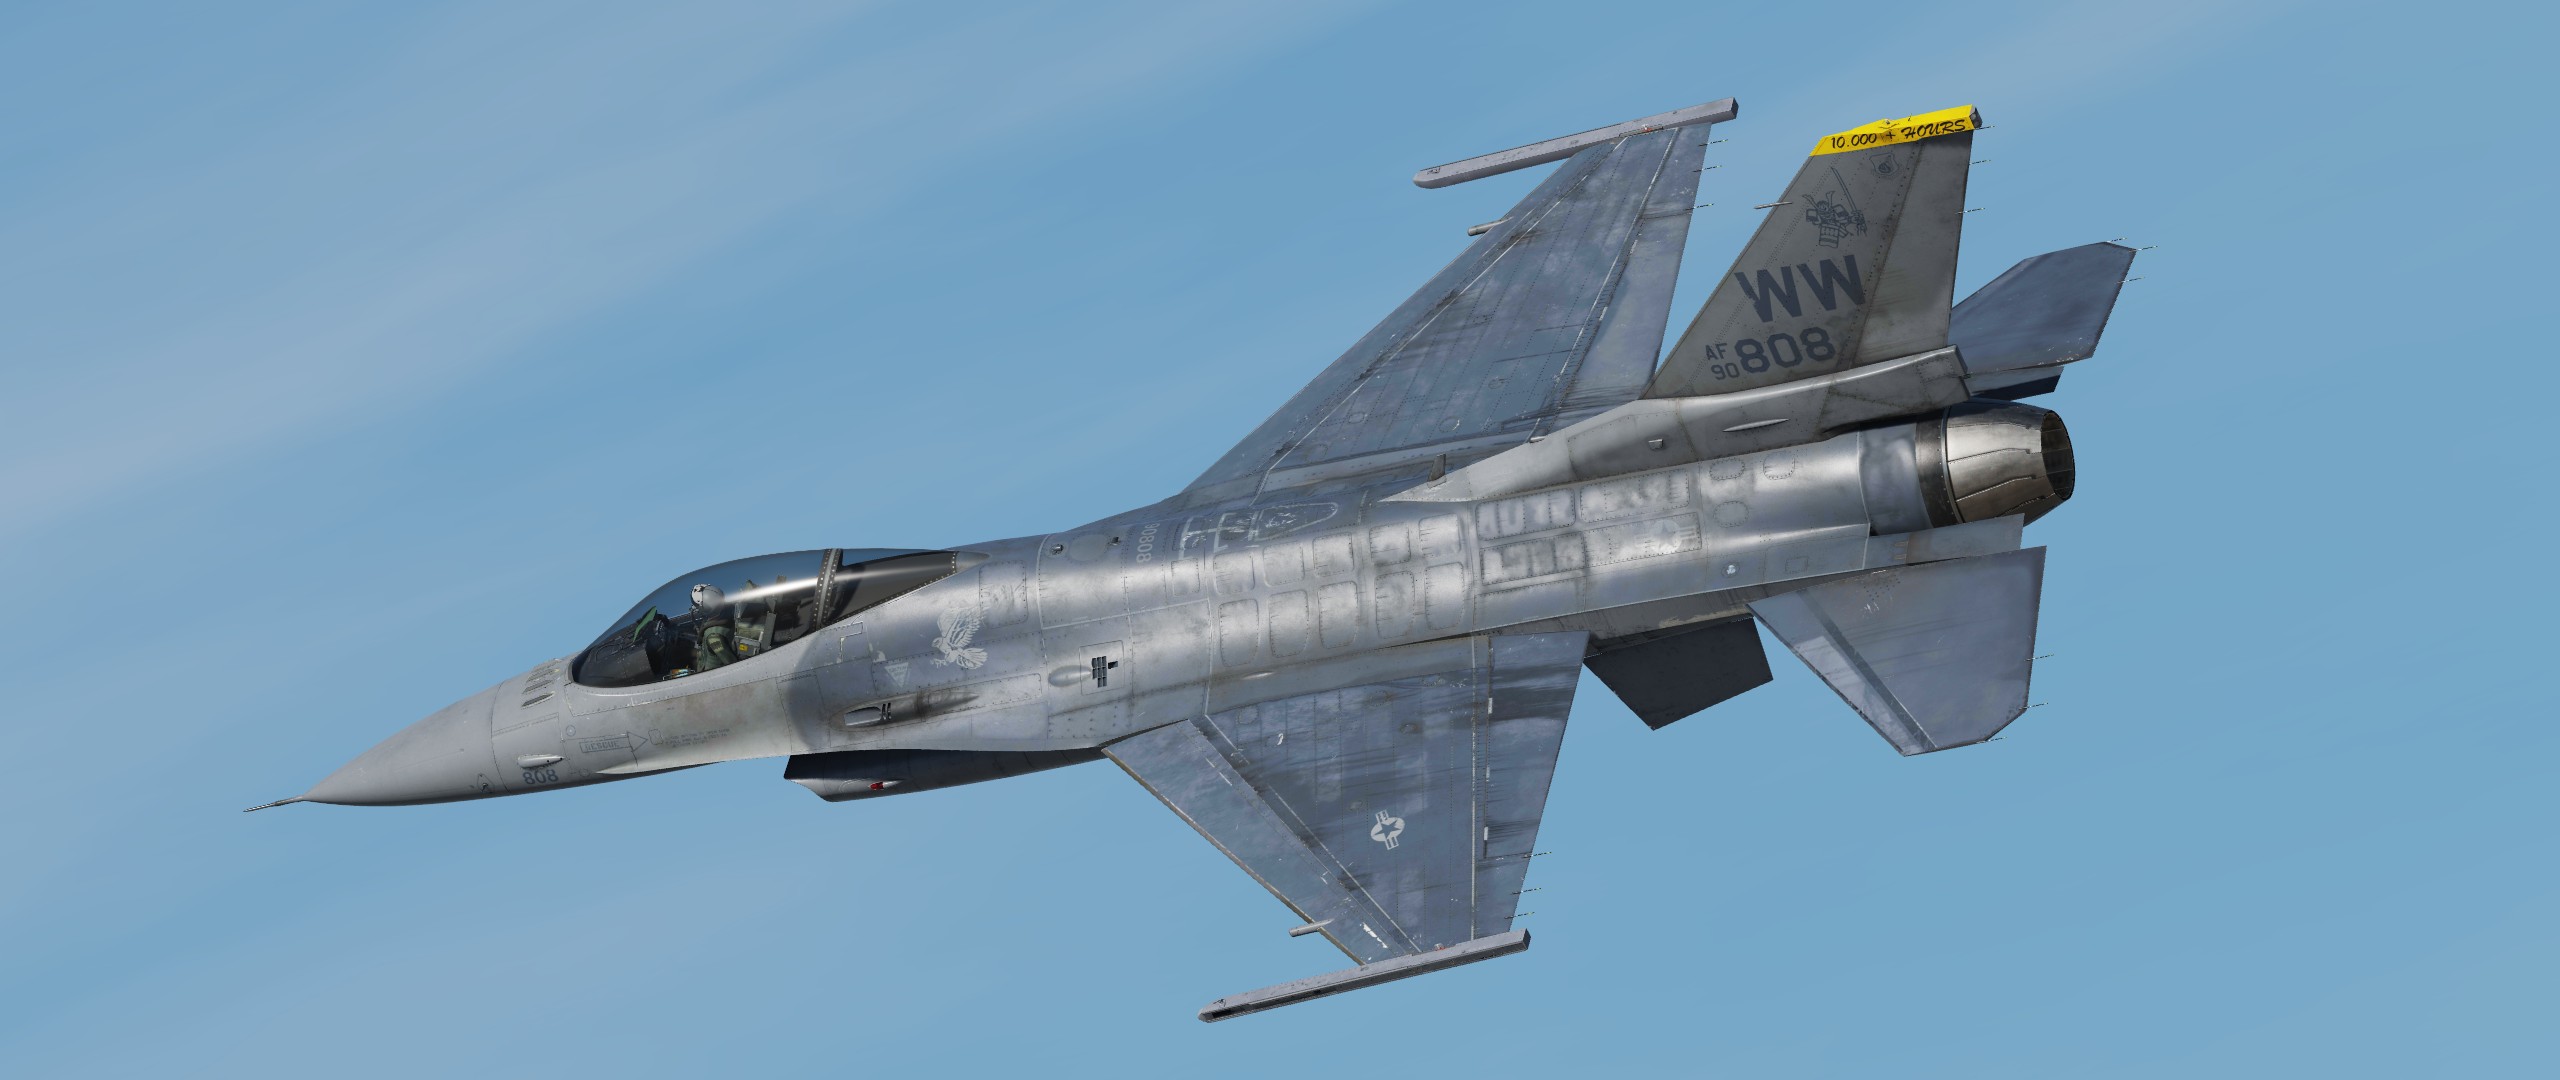 F-16C, 14th FS, WW 90-808 -Ultra Weathered- "BOB" update v1.3